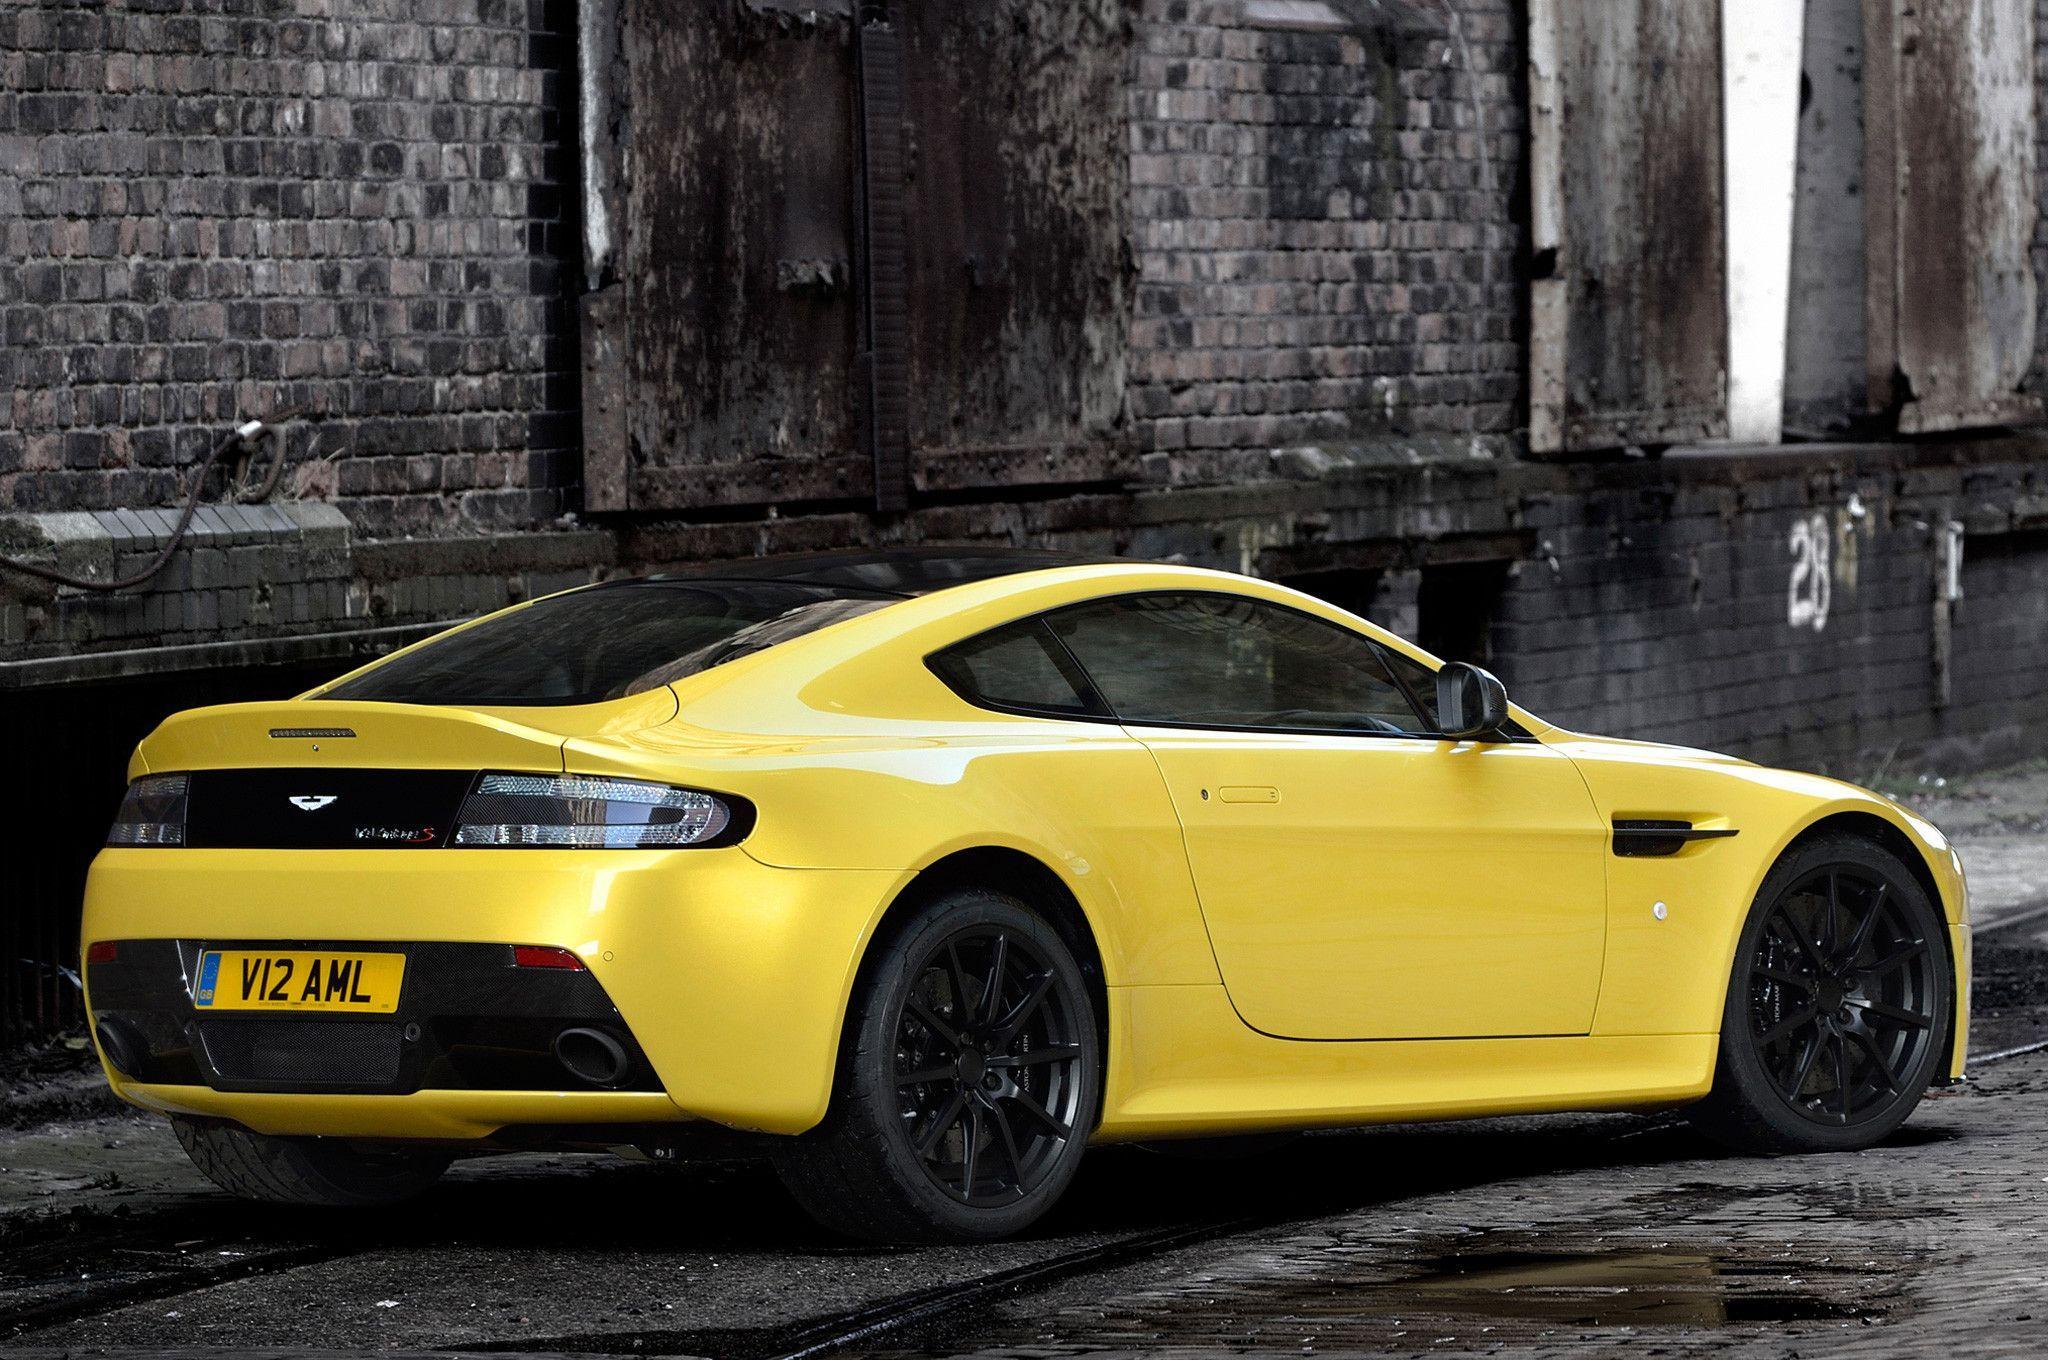 Aston Martin V8 Vantage GT Free High Quality Wallpaper